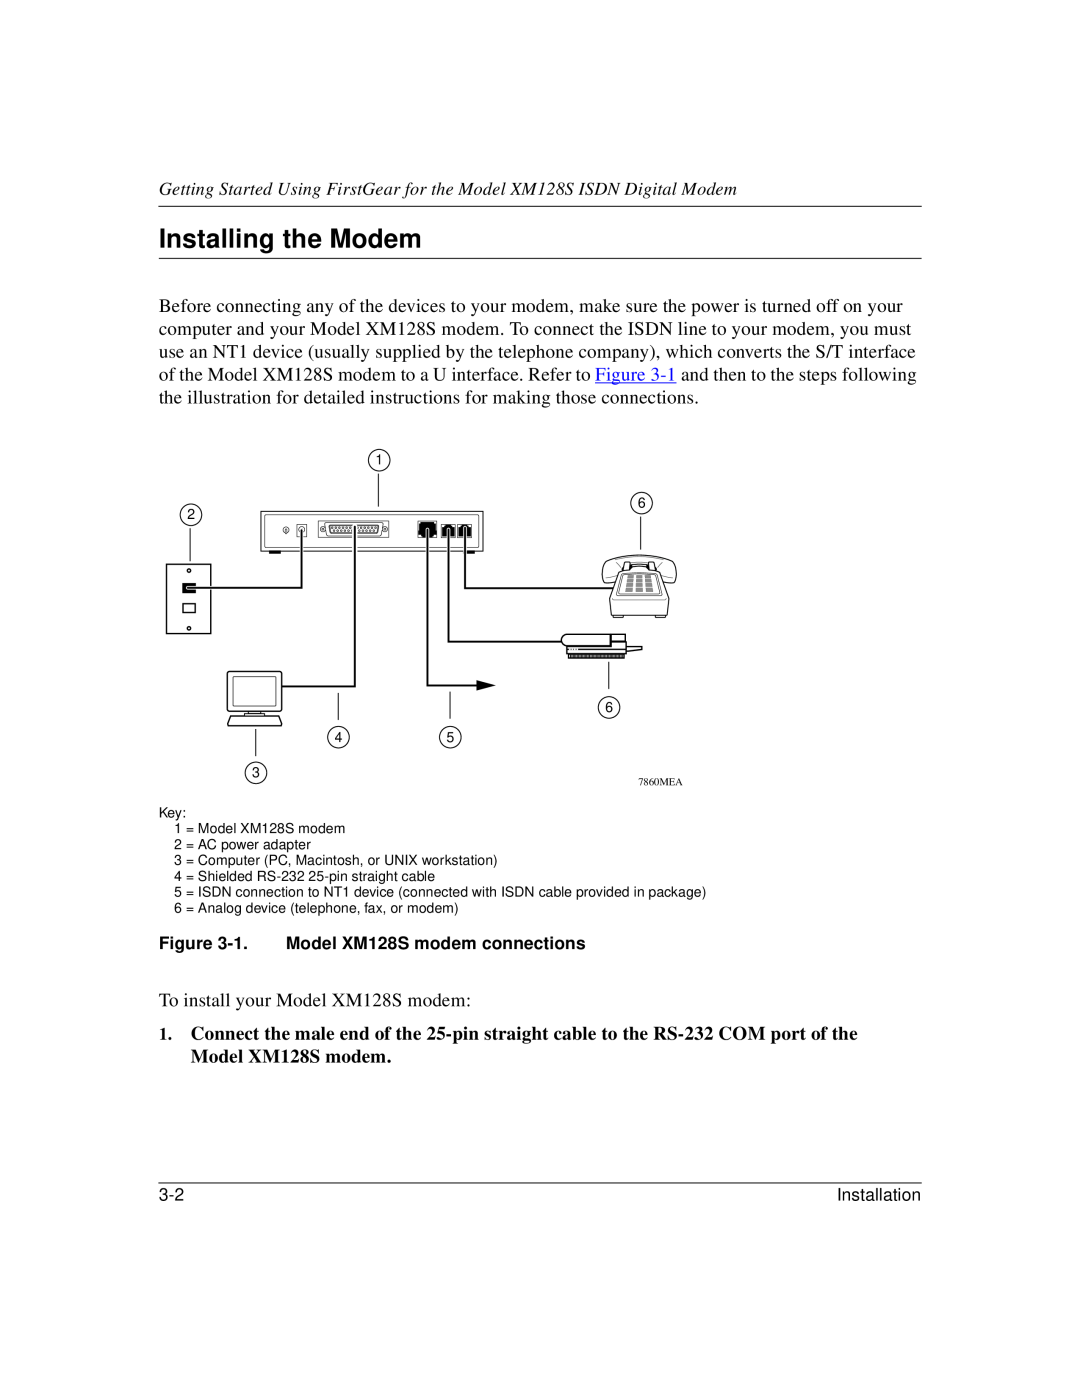 NETGEAR XM128S manual Installing the Modem 